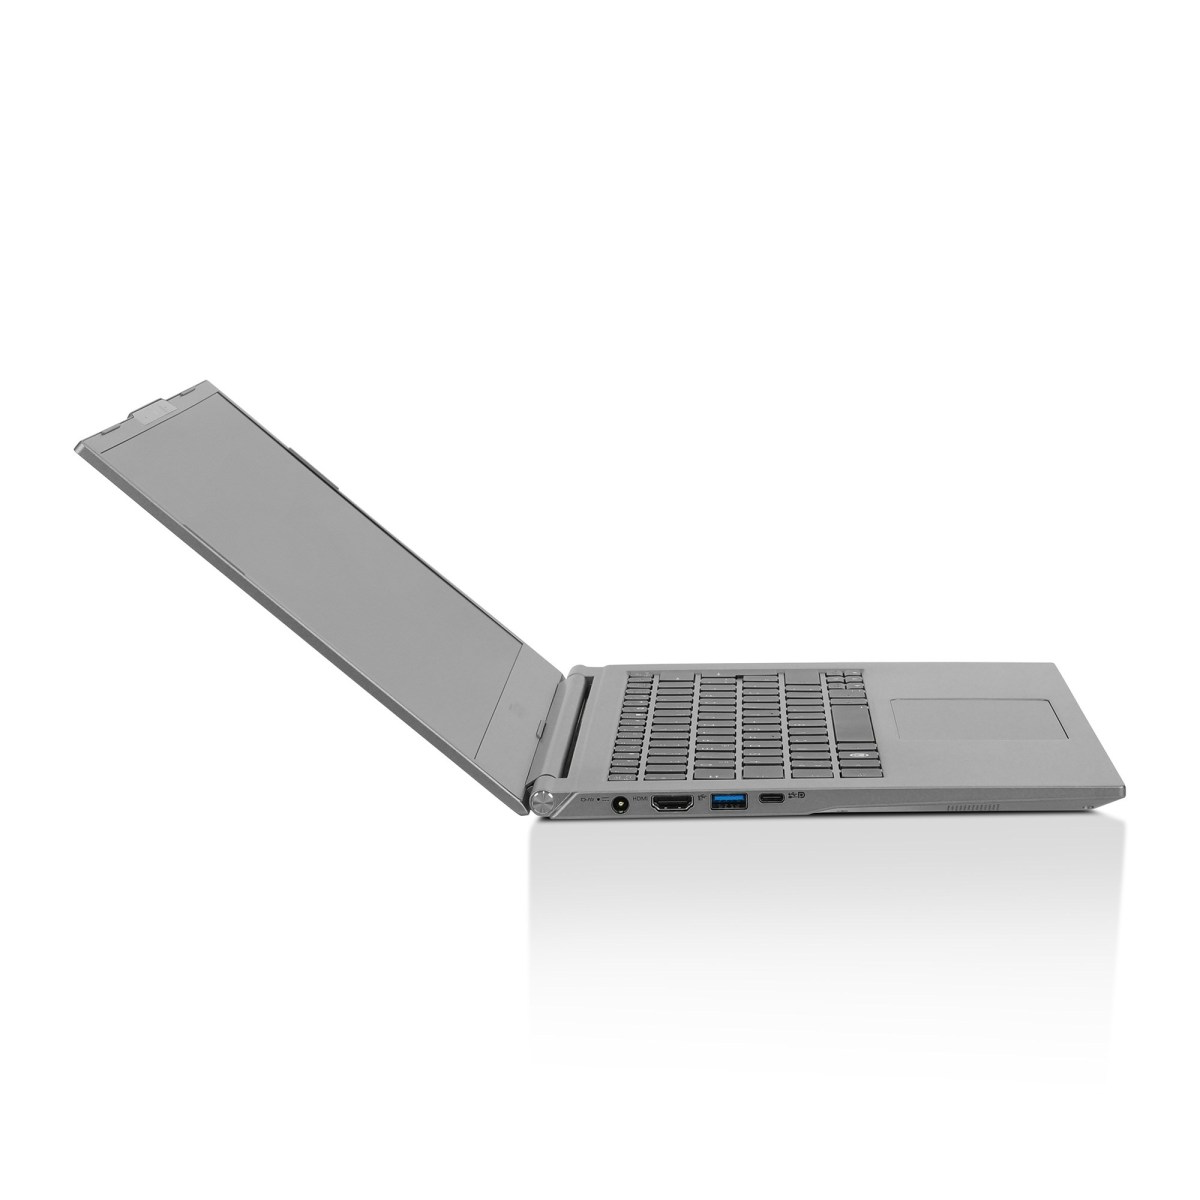 TUXEDO Computers divulga novo laptop InfinityBook S 14 Linux